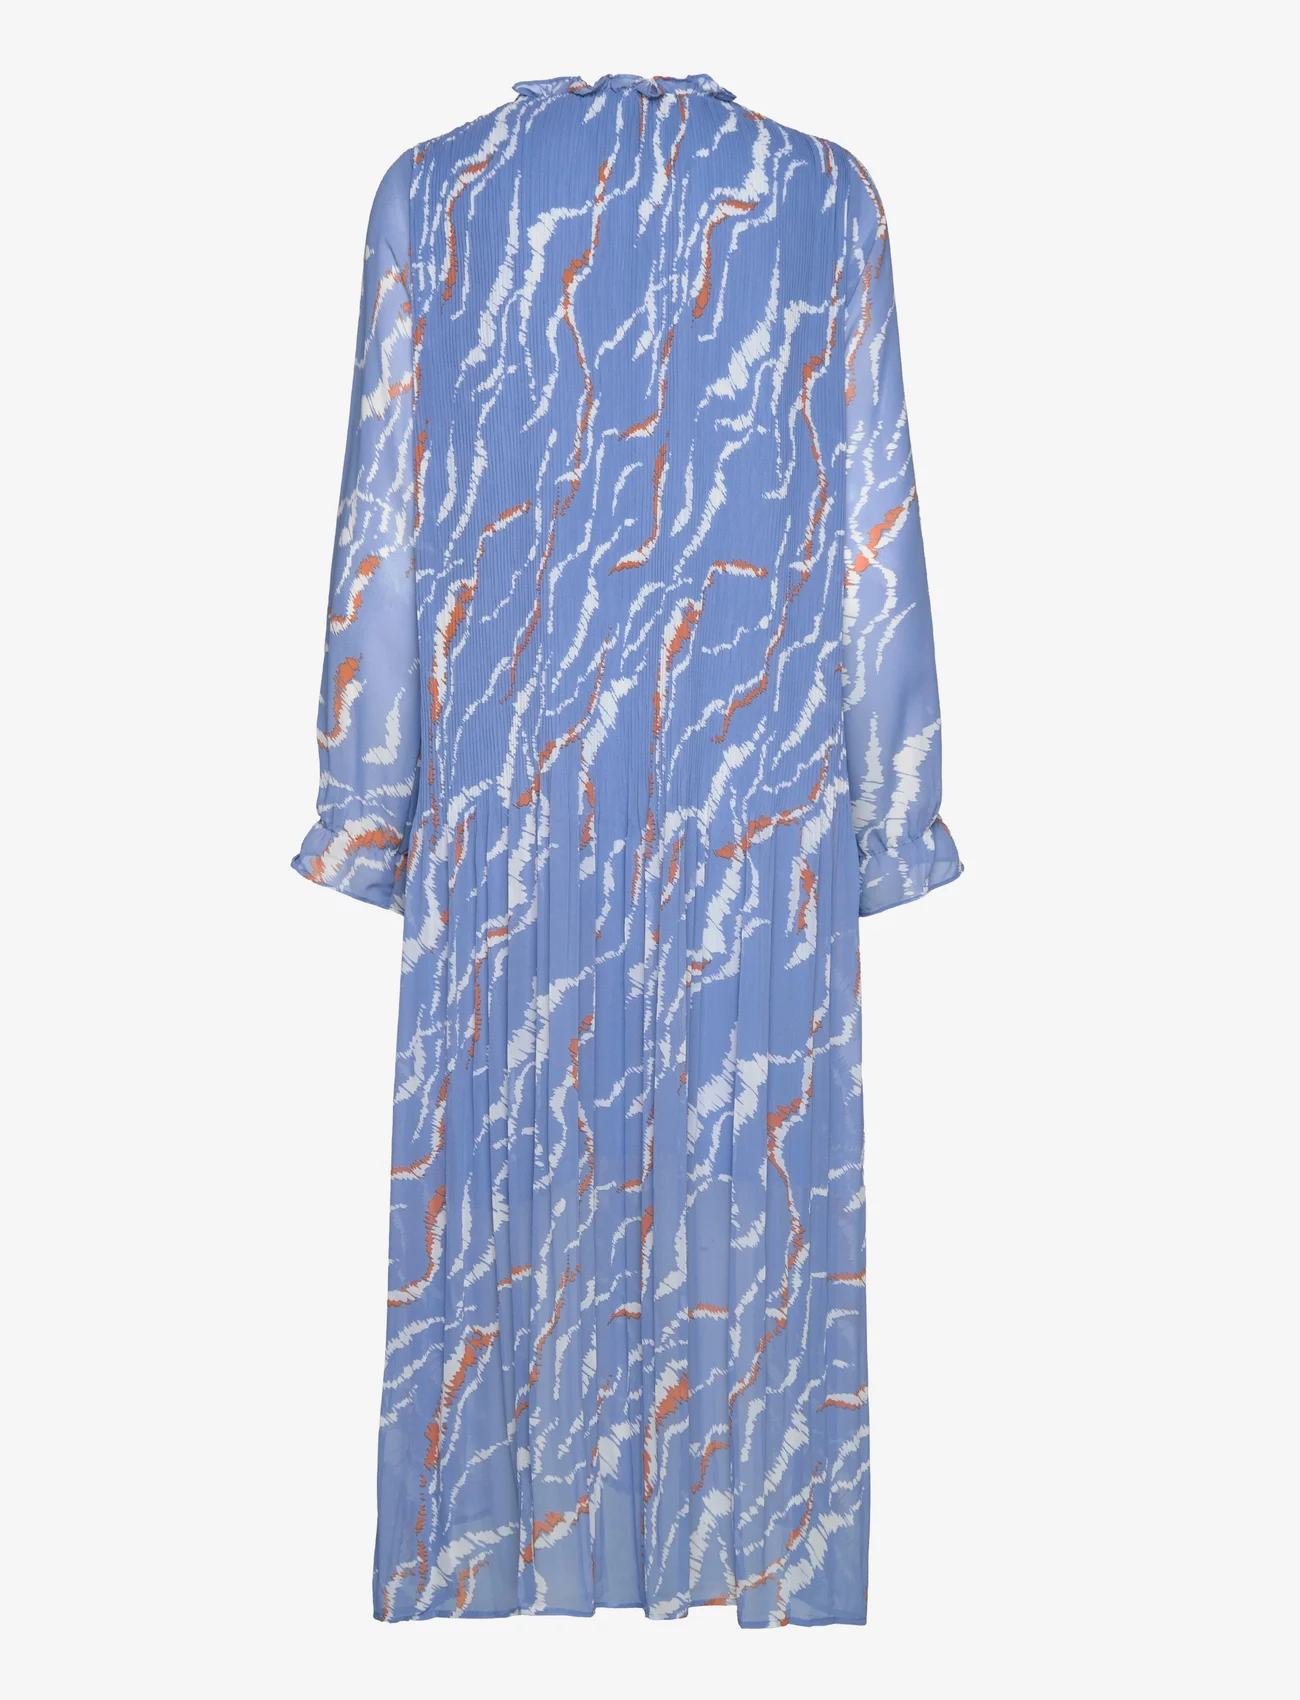 Minus - Rikka Mia V-neck Long Dress - midi kjoler - denim blue graphic print - 1